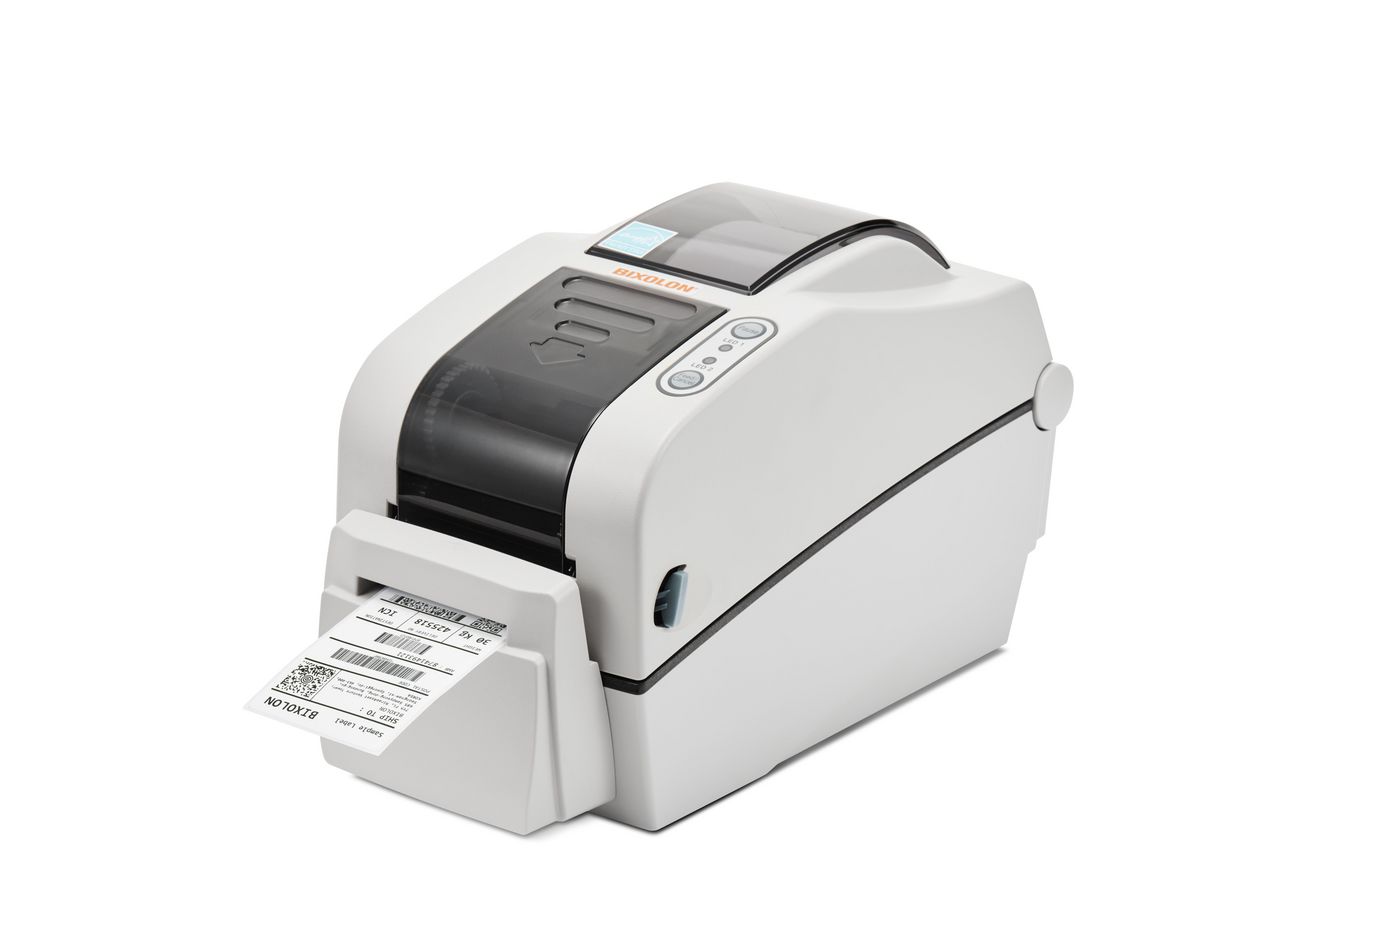 Slp-tx223de - Label Printer - Direct Thermal - USB / Serial / Parallel